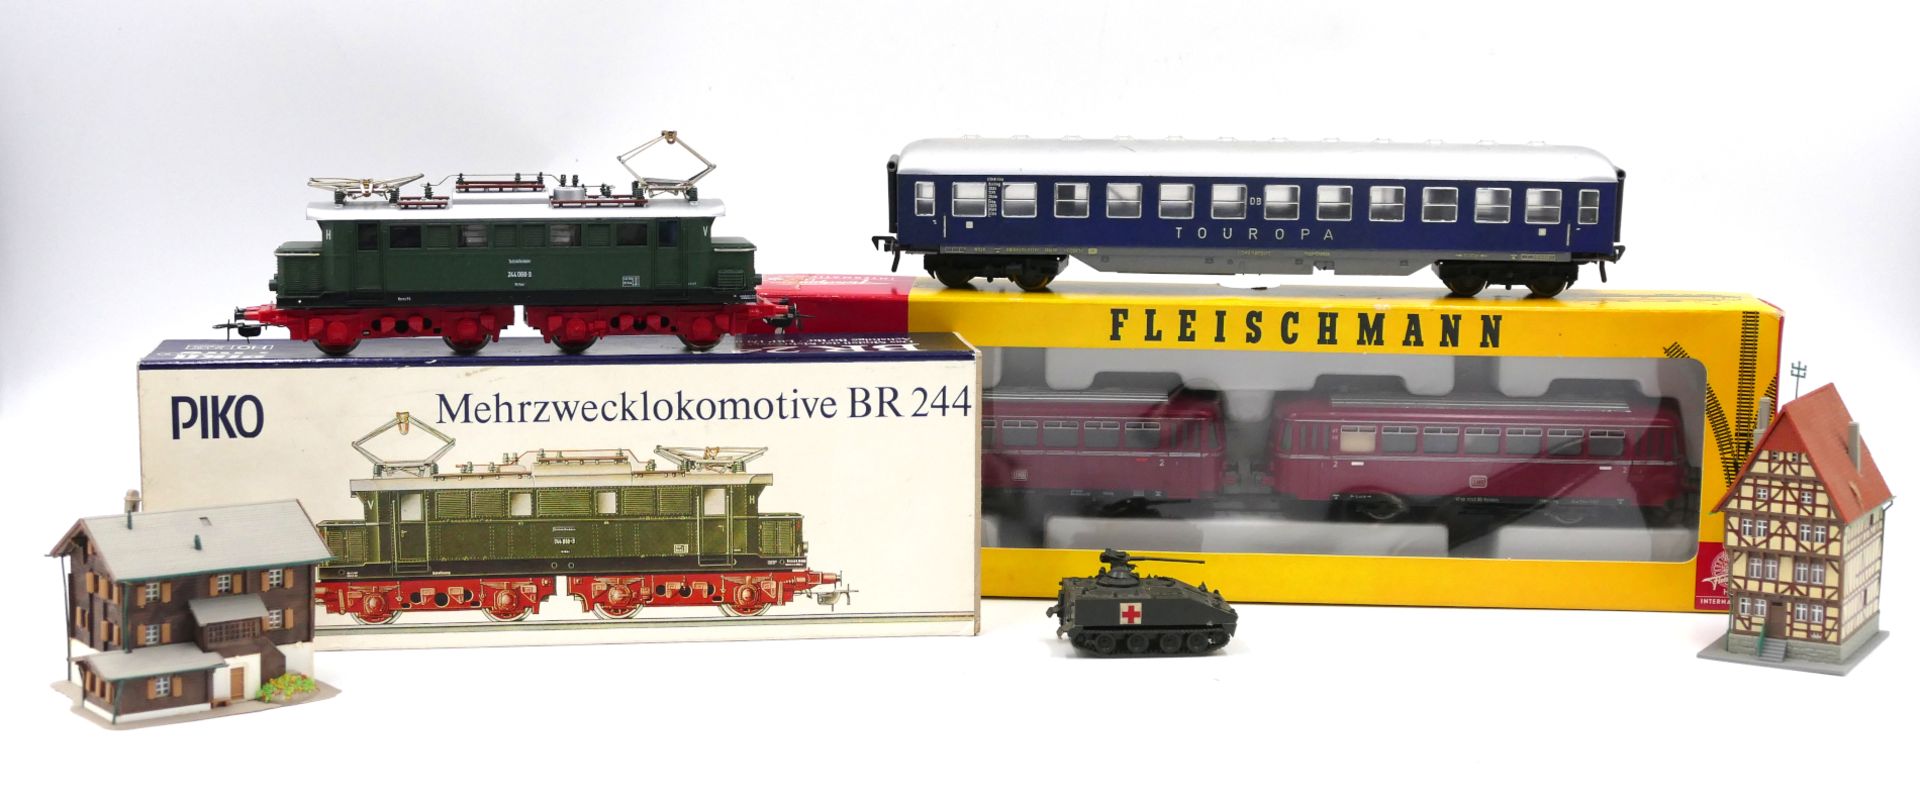 1 Konv. Modelleisenbahn ROCO, PIKO, FLEISCHMANN, SACHSENMODELLE, u.a. je Spur H0: 3 Lokomotiven, 1 S